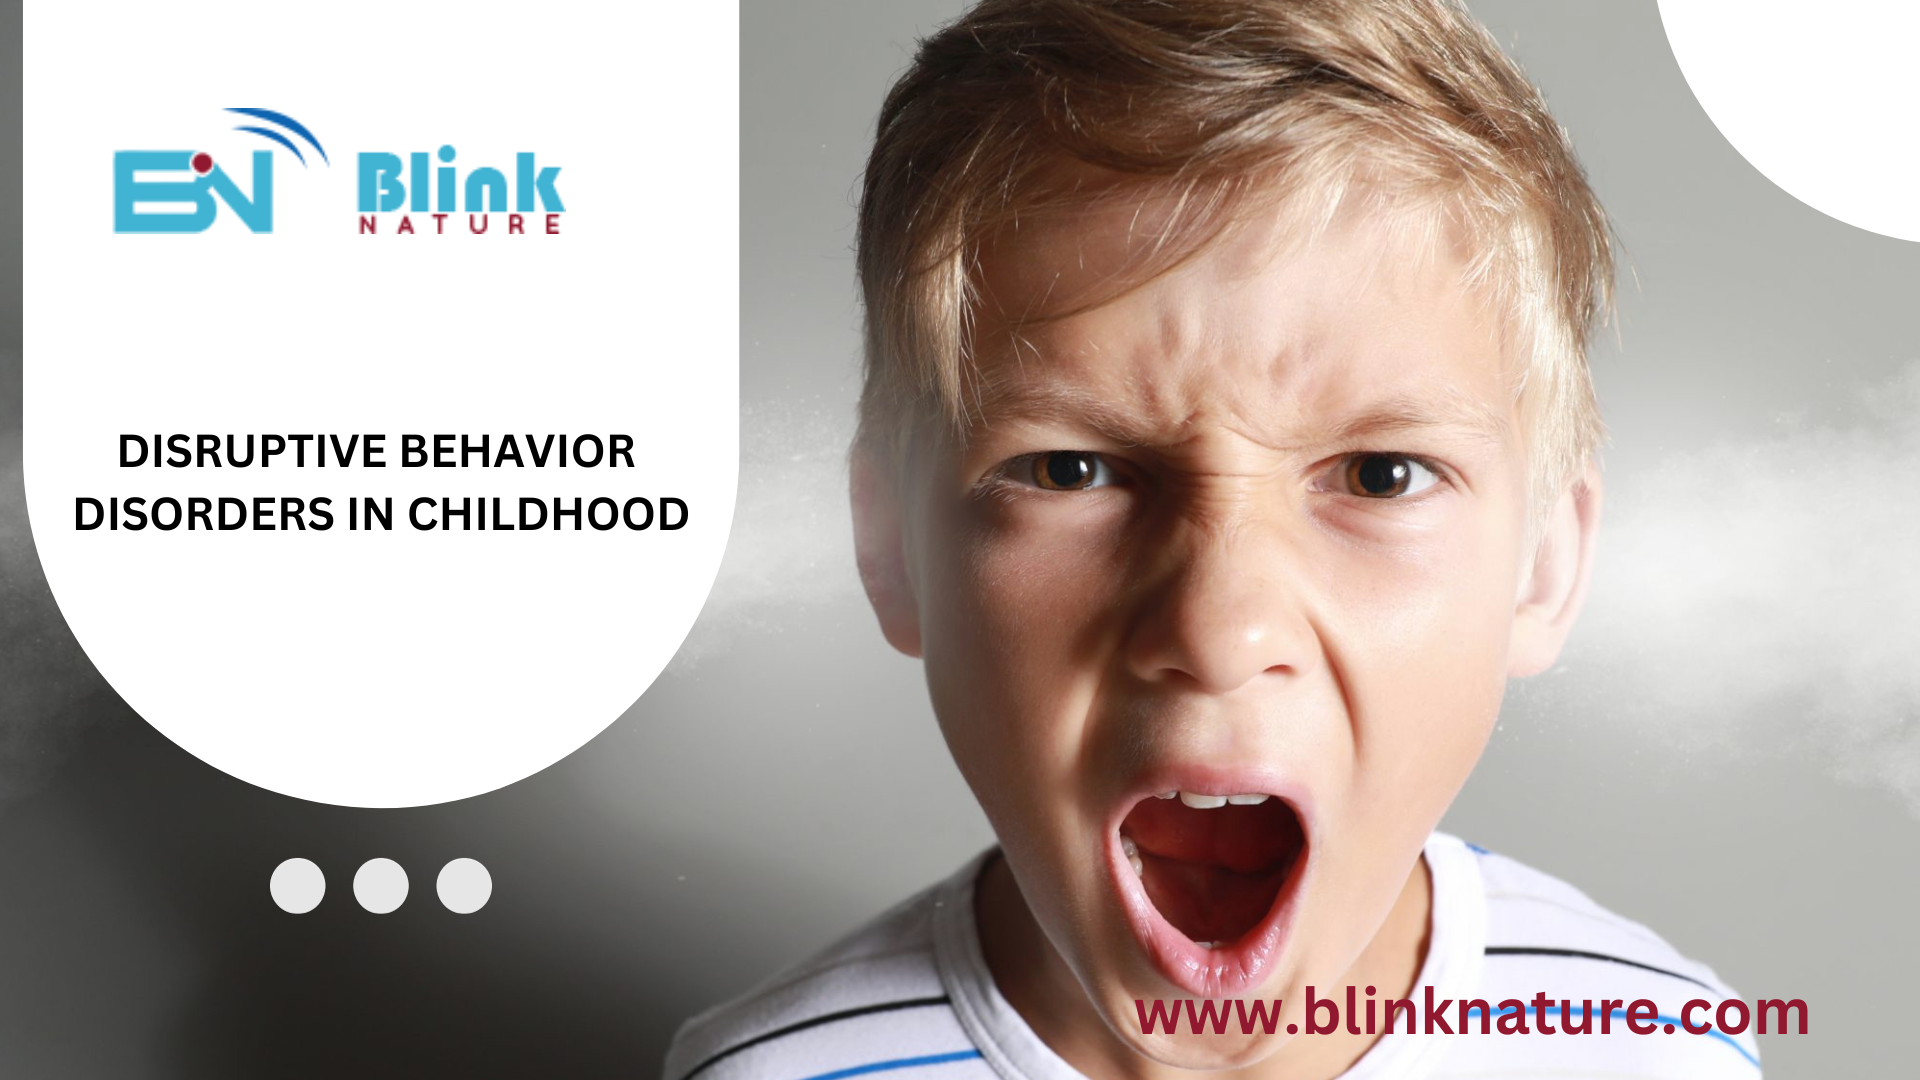 Disruptive Behavior Disorders in Childhood